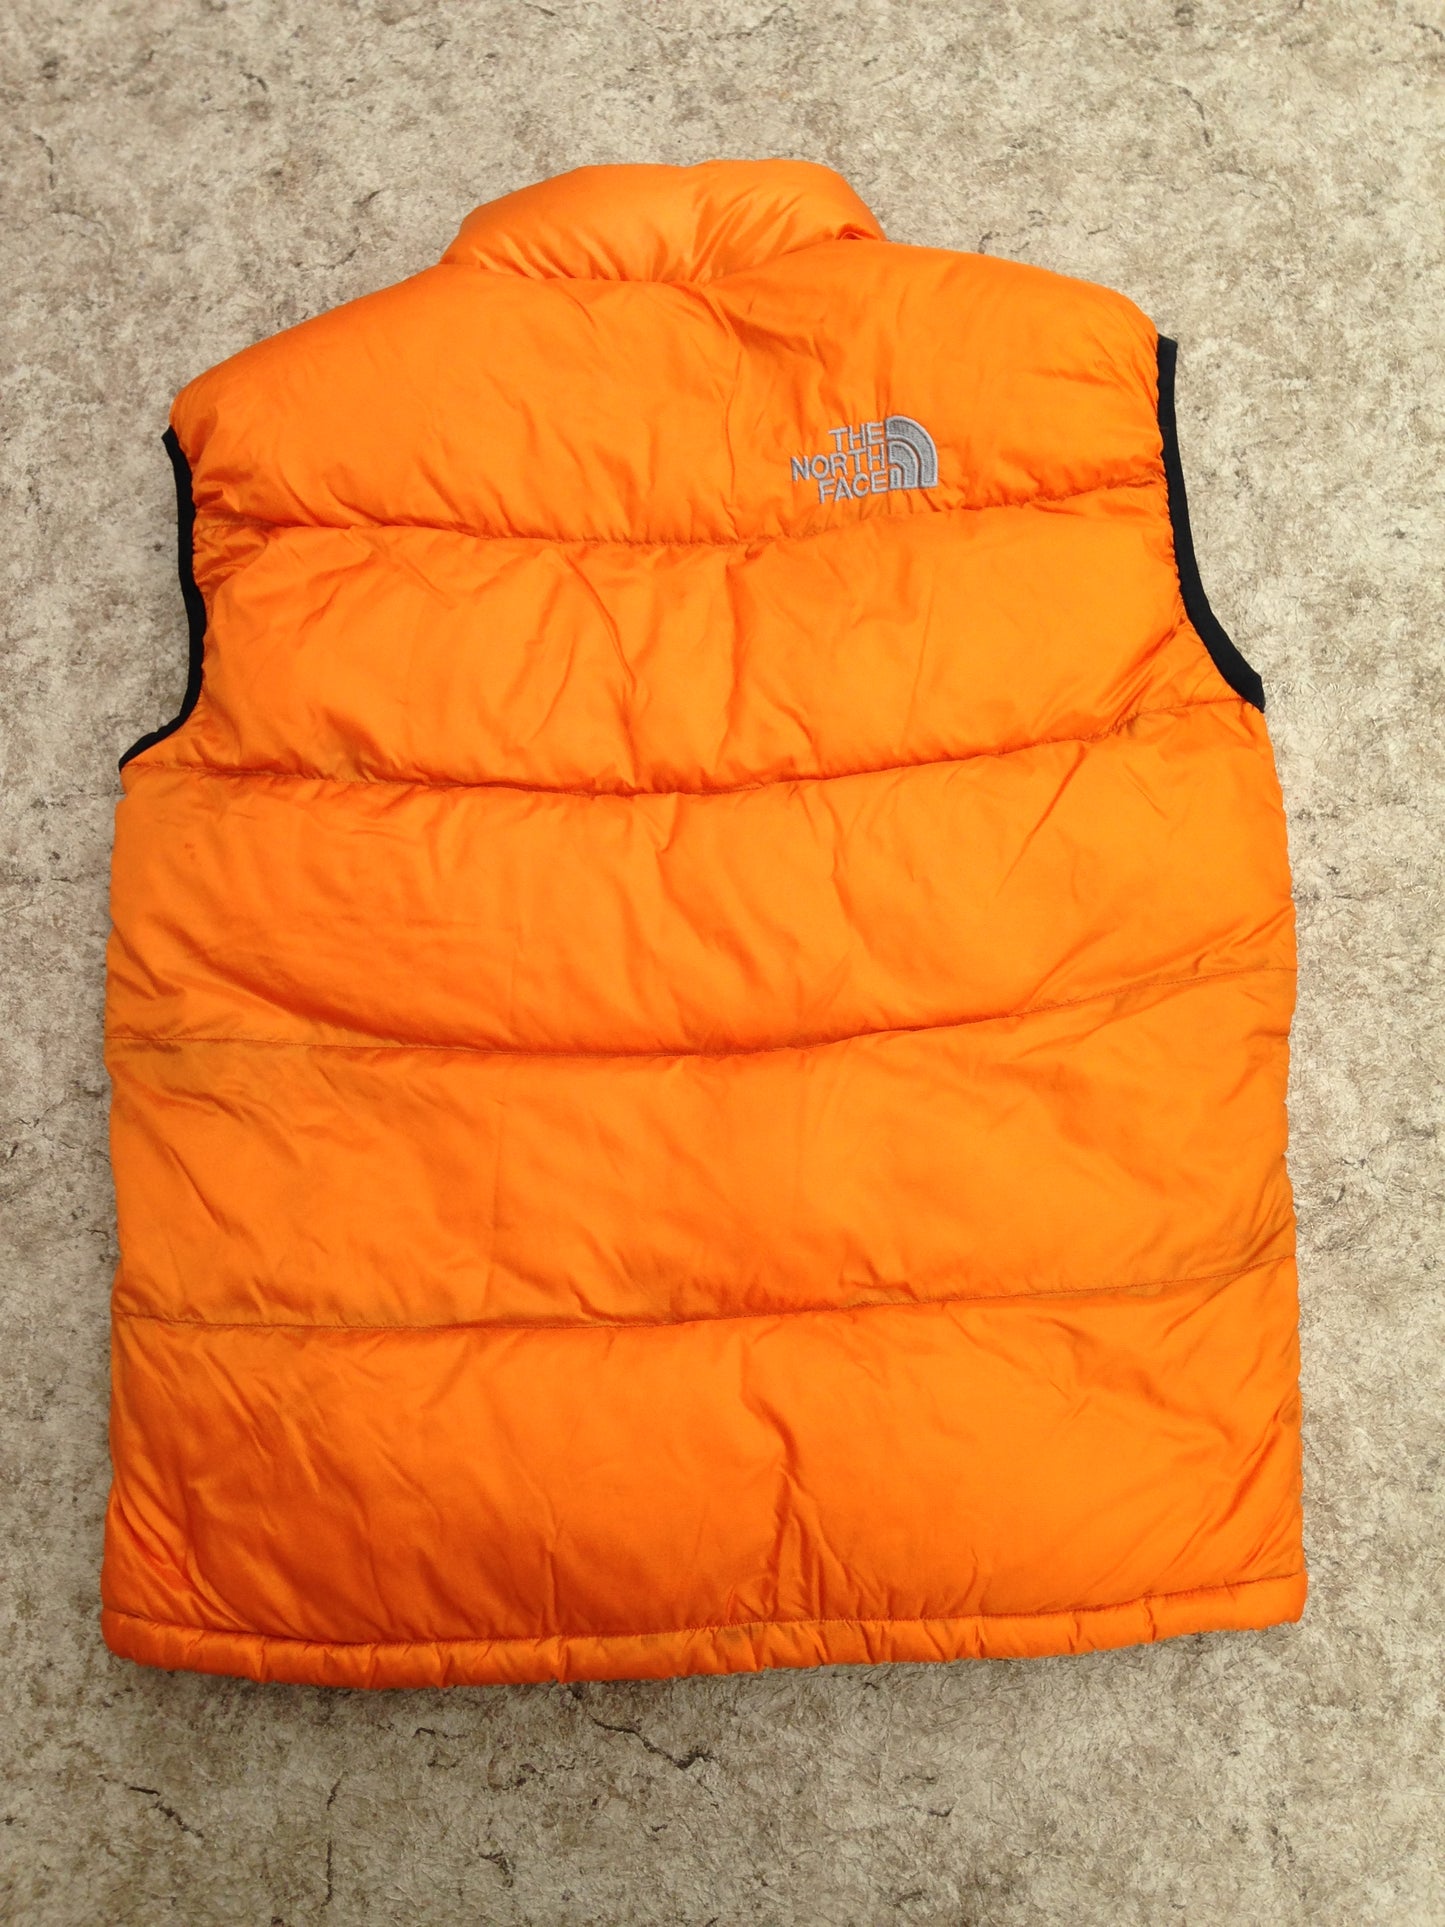 Winter Coat Vest Men's Size Medium The North Face Pumpkin Black